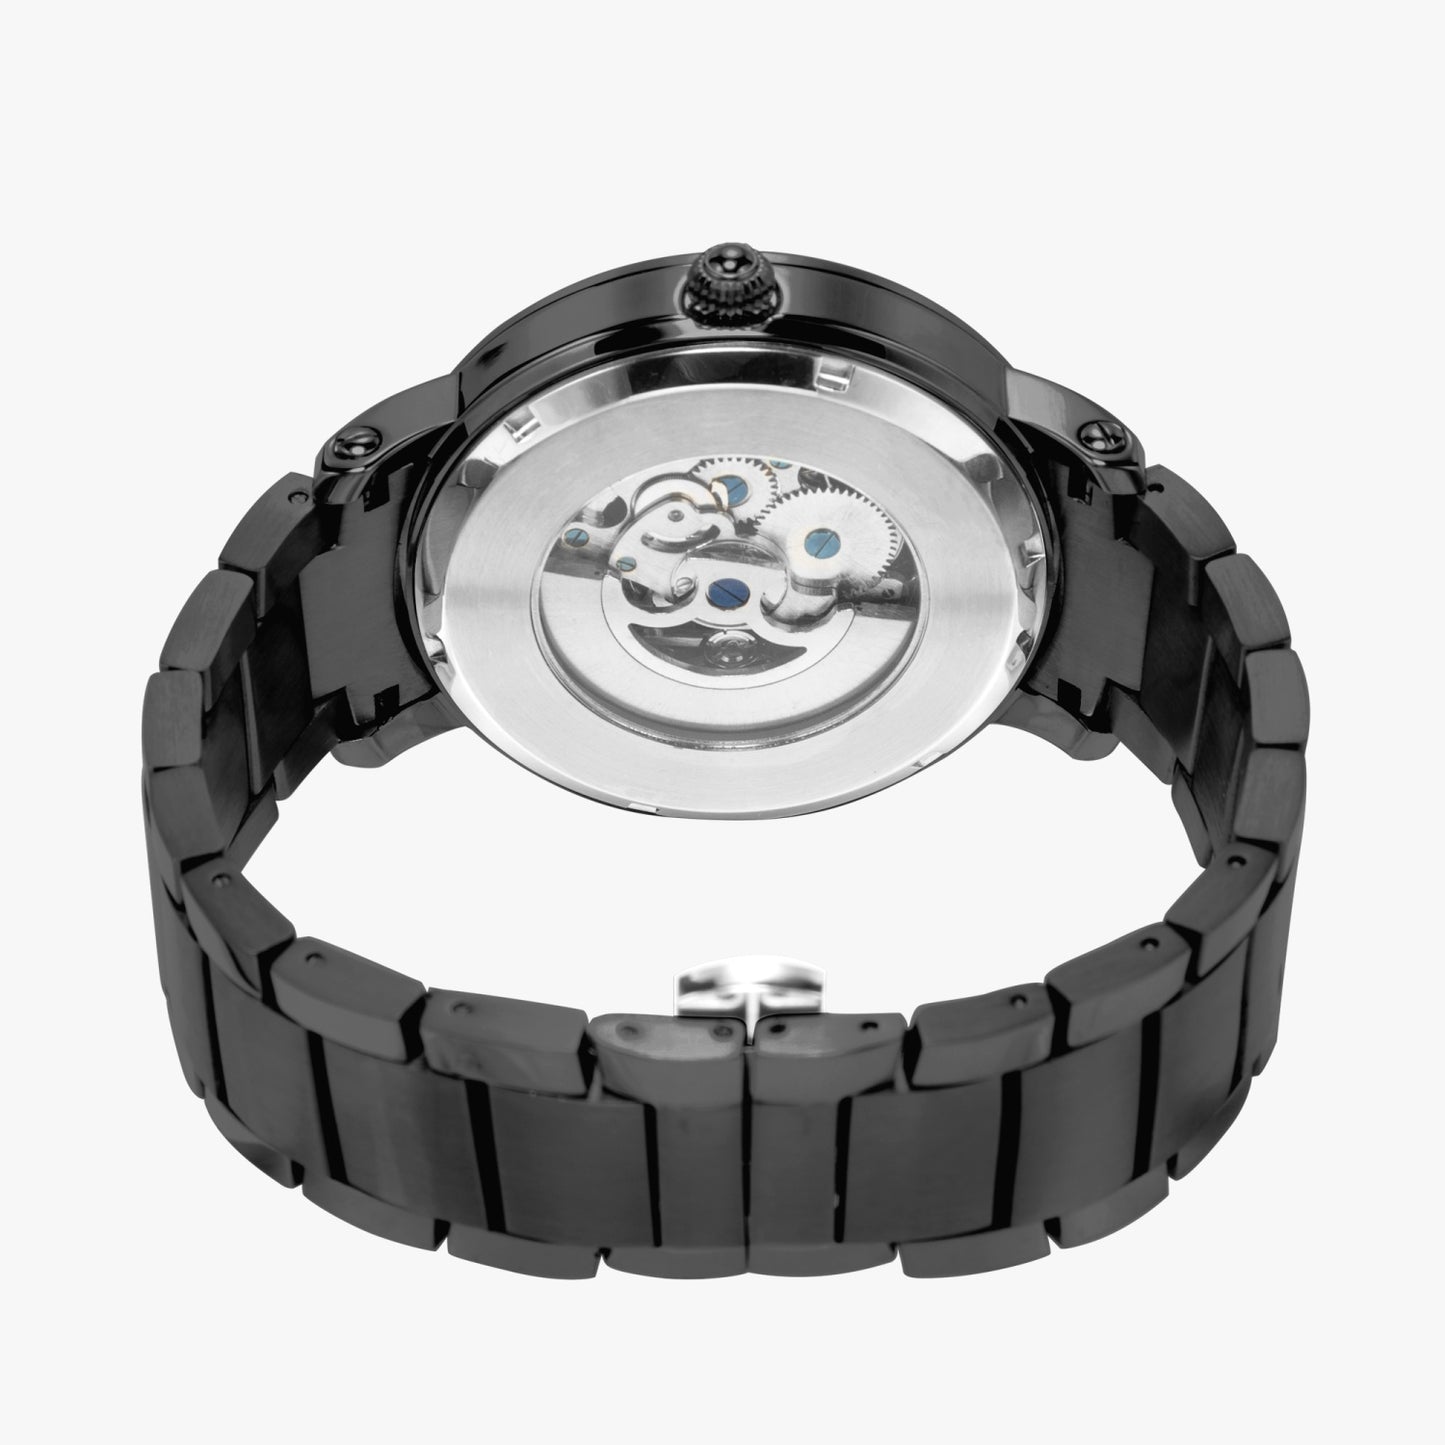 Italia Automatic Movement Watch black - Premium Stainless Steel